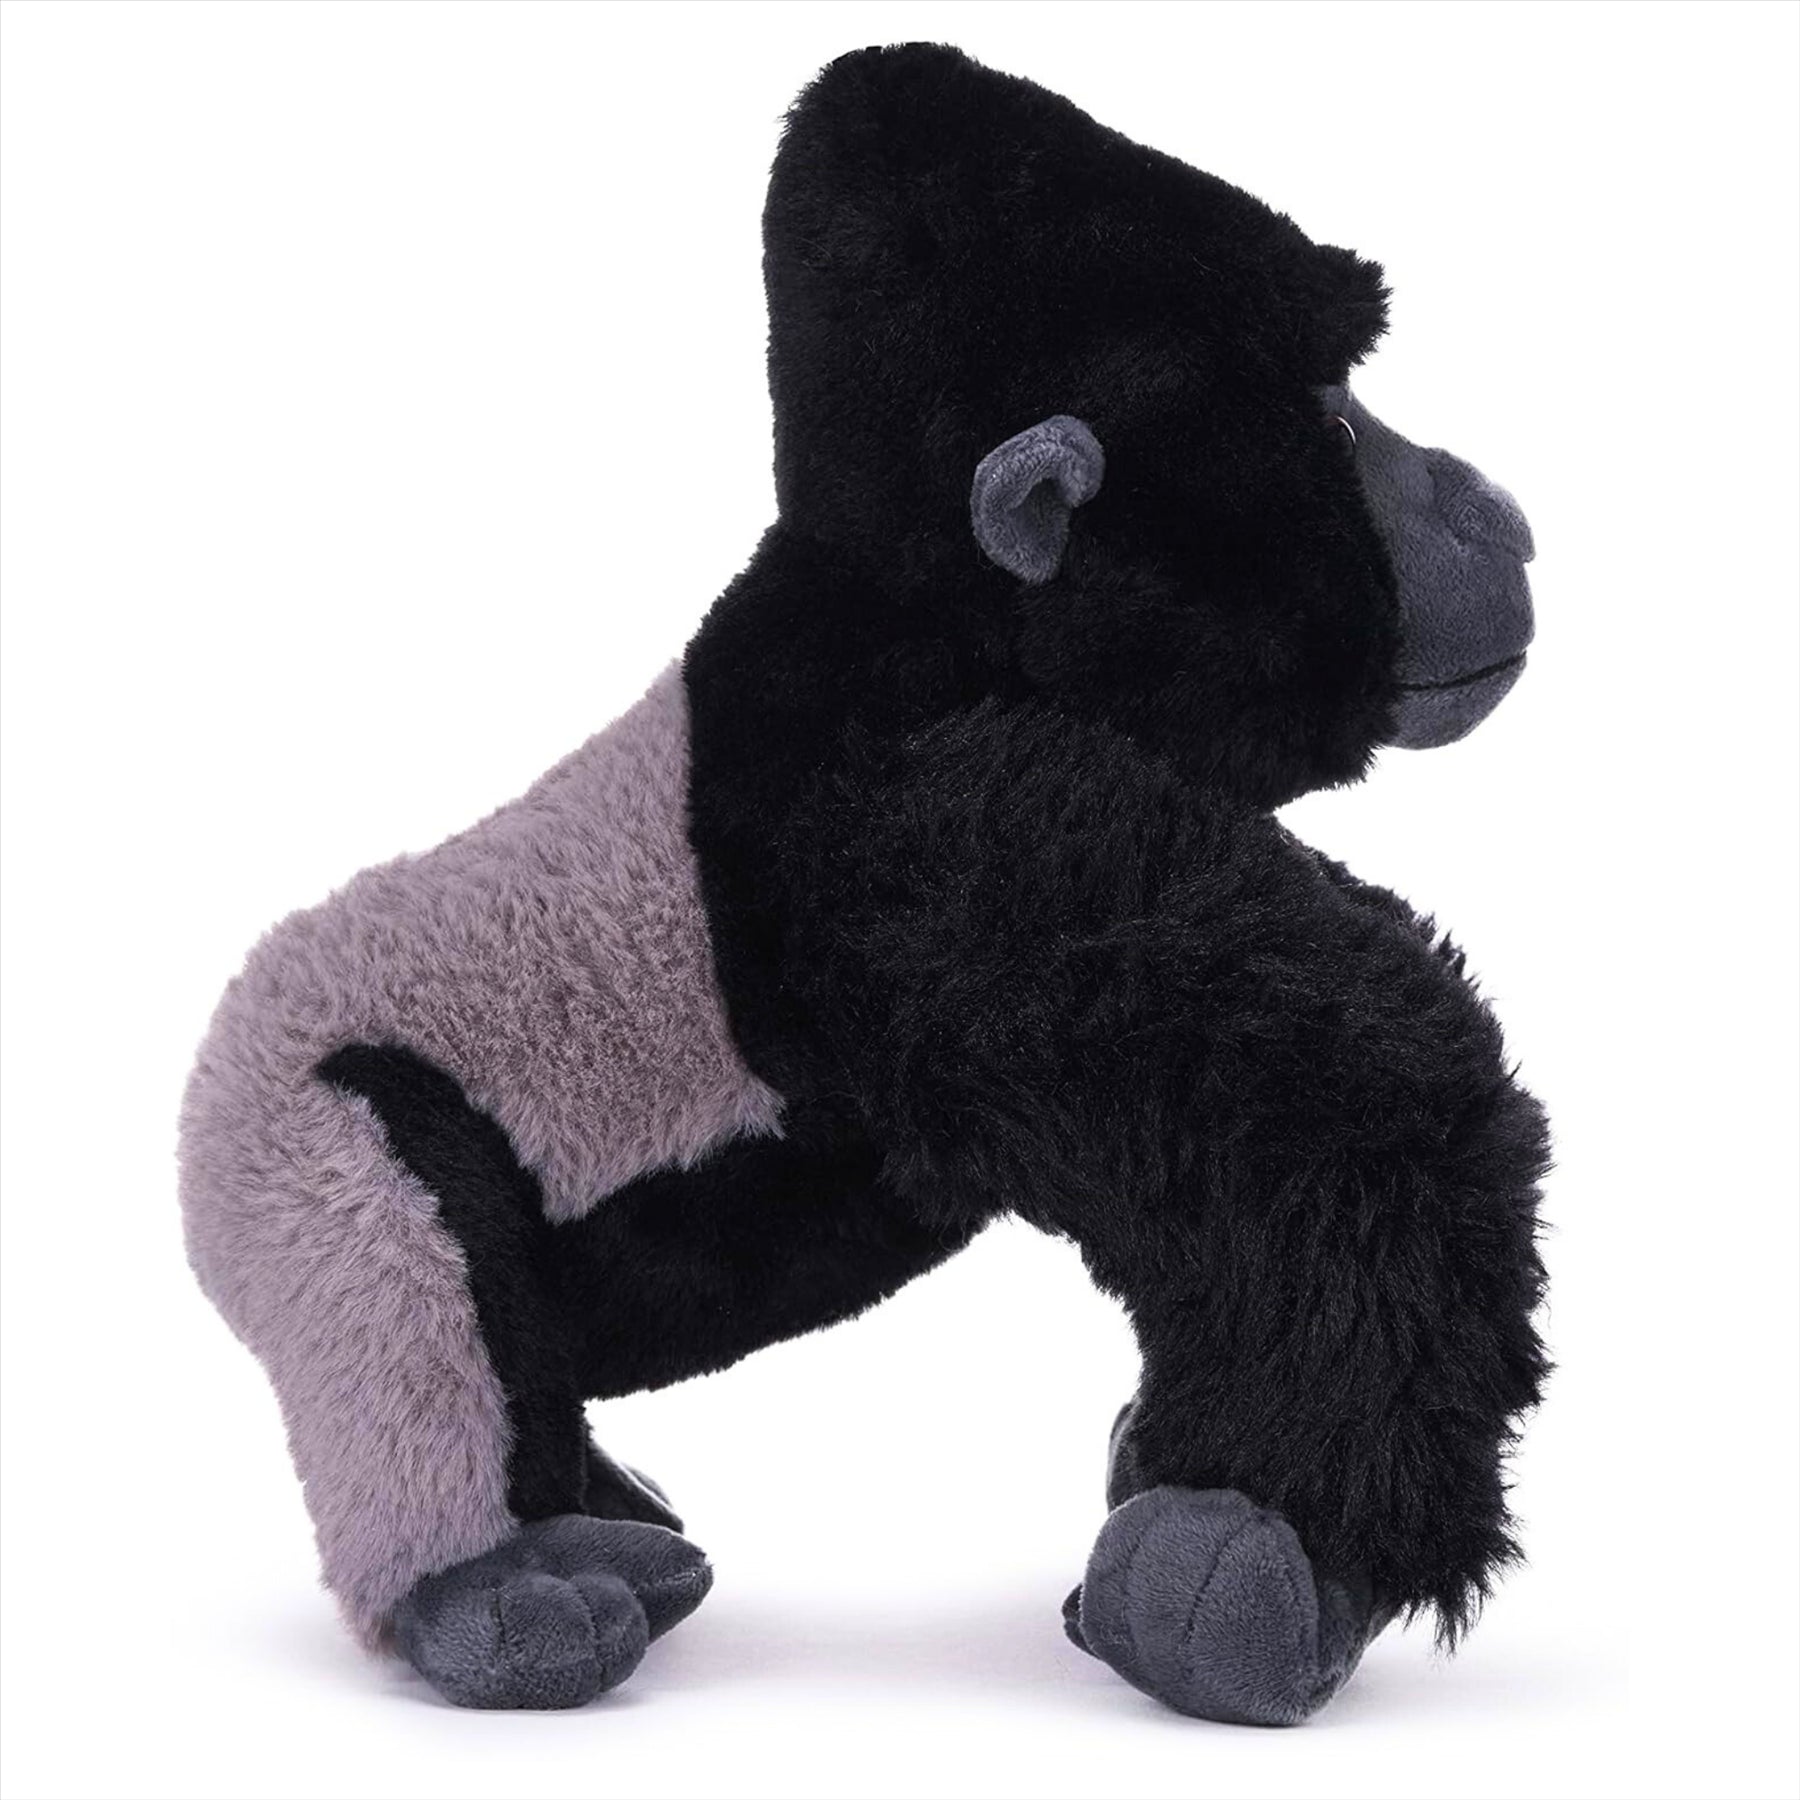 Posh Paws Around the World Animals Collection Gorilla Super Soft Plush Toy 30cm 12"